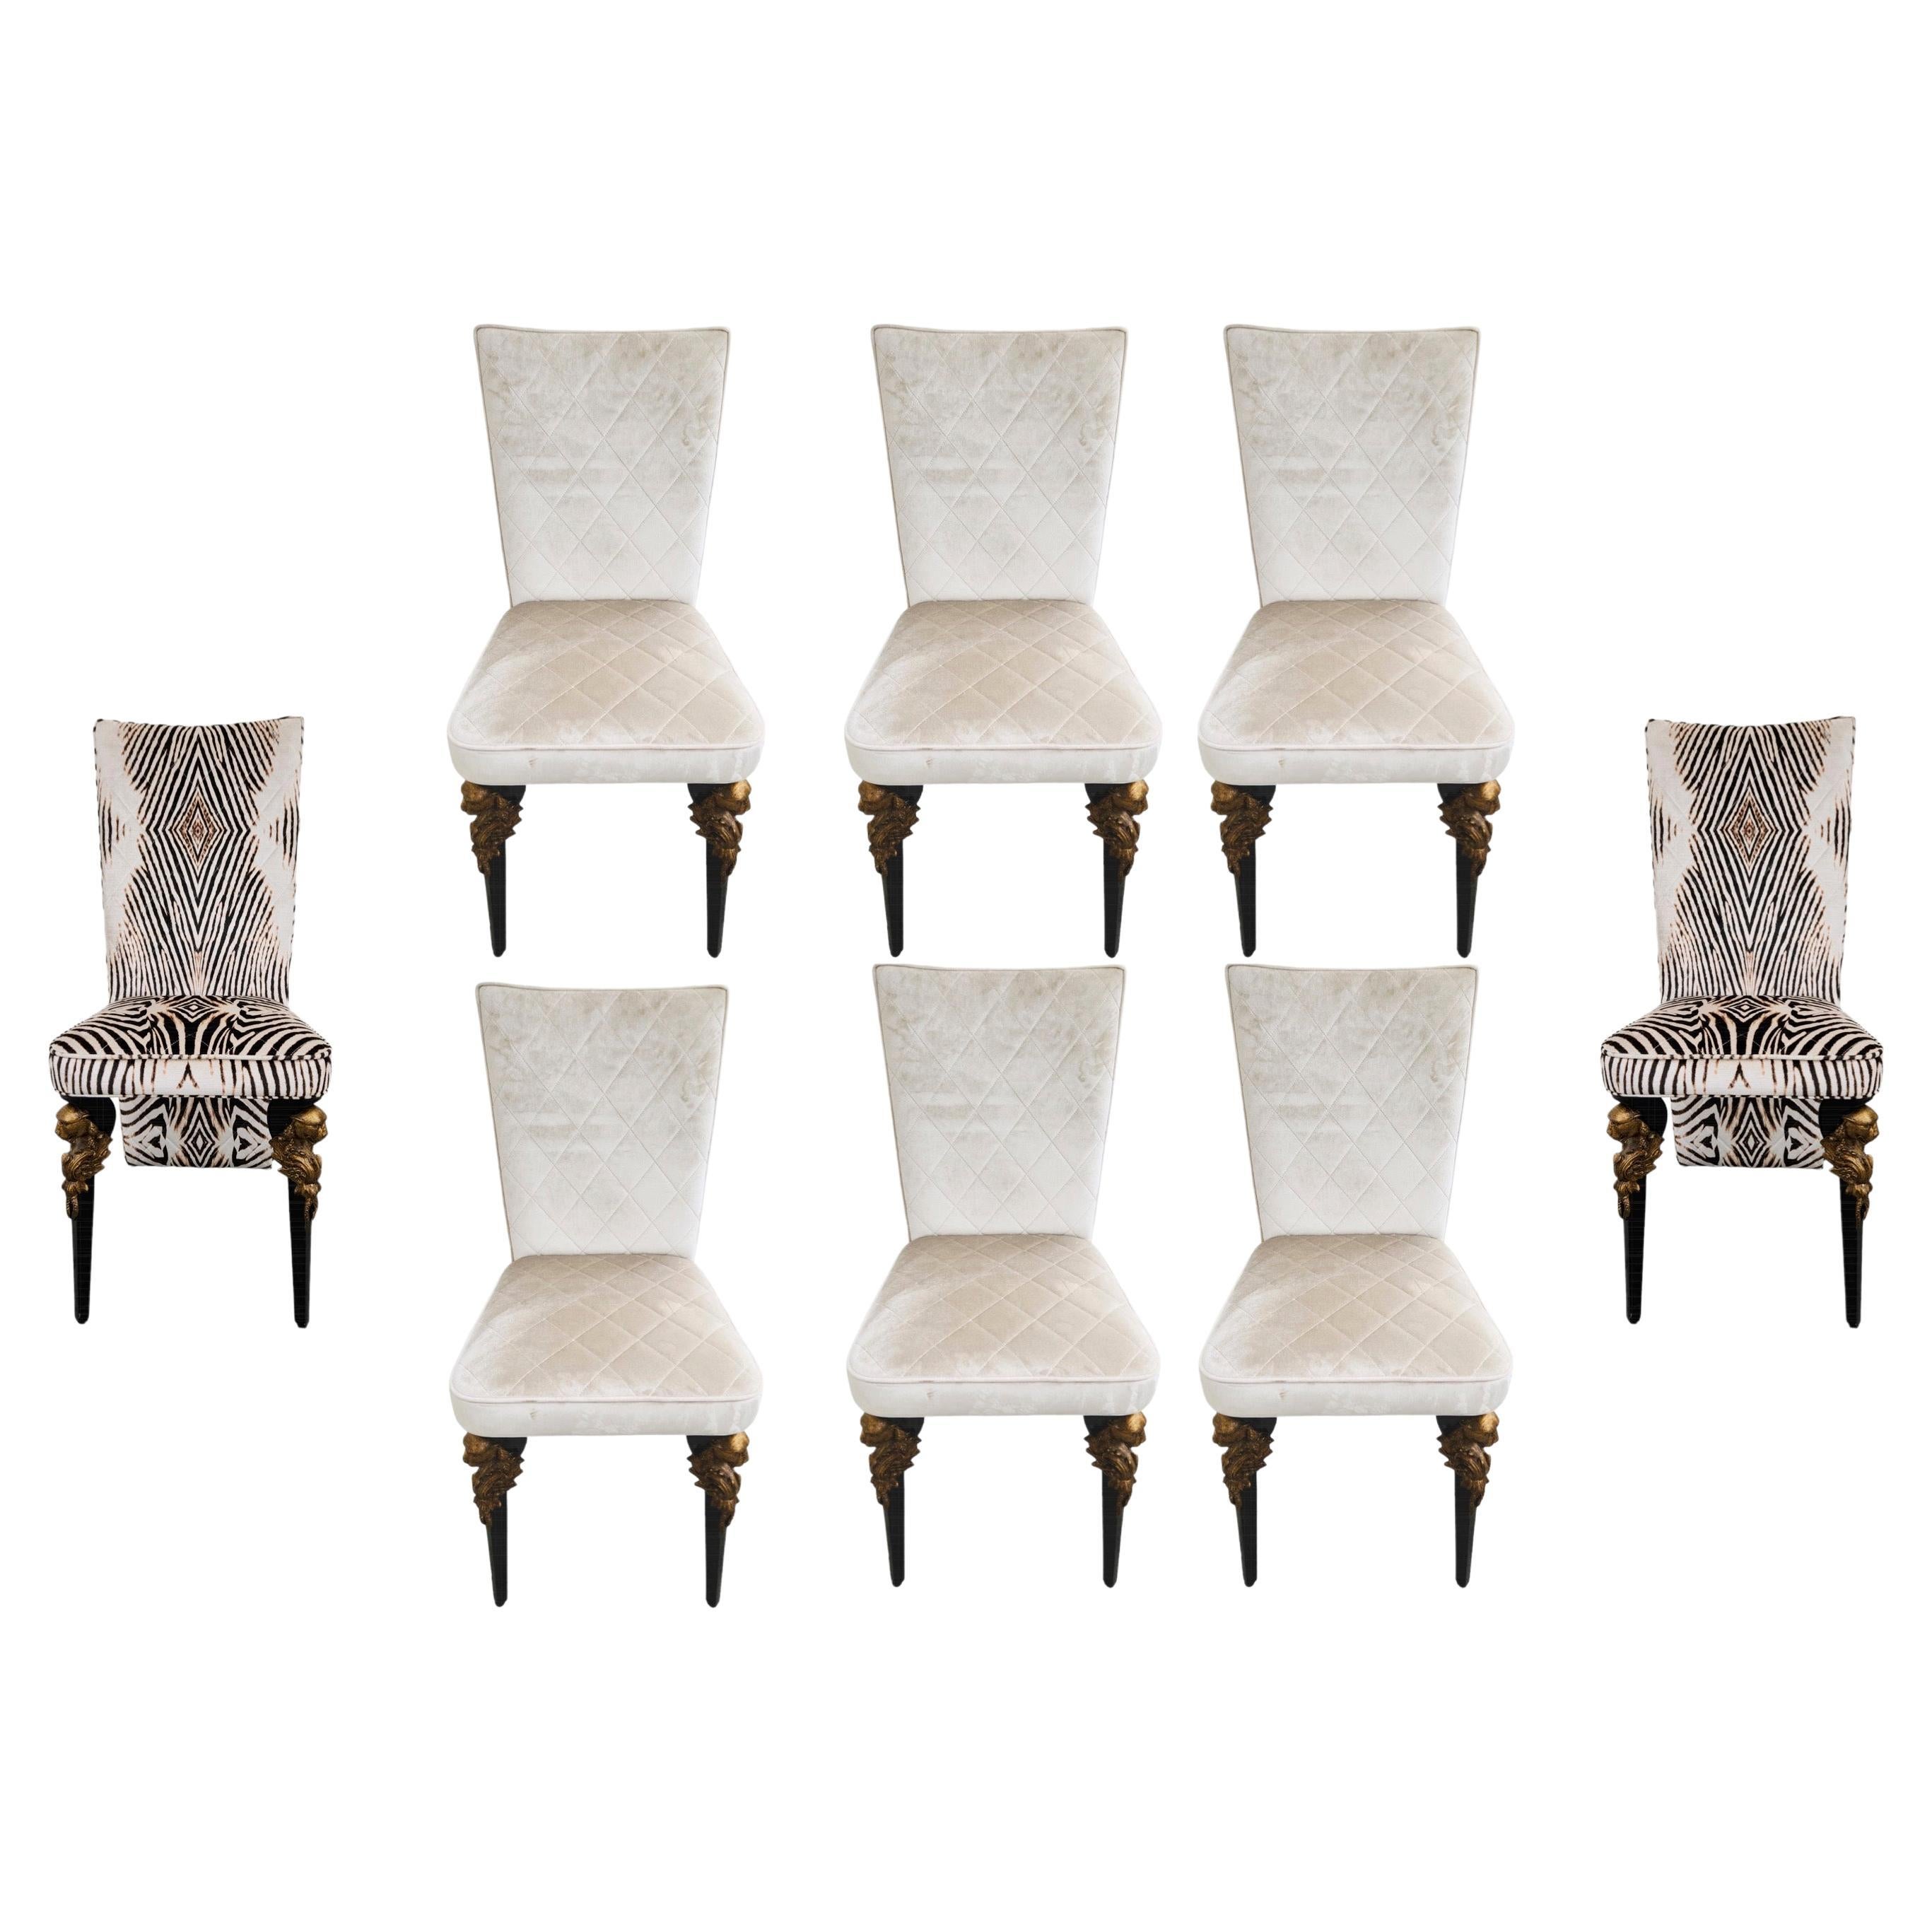 Set of Eight Roberto Cavalli Dining Chairs